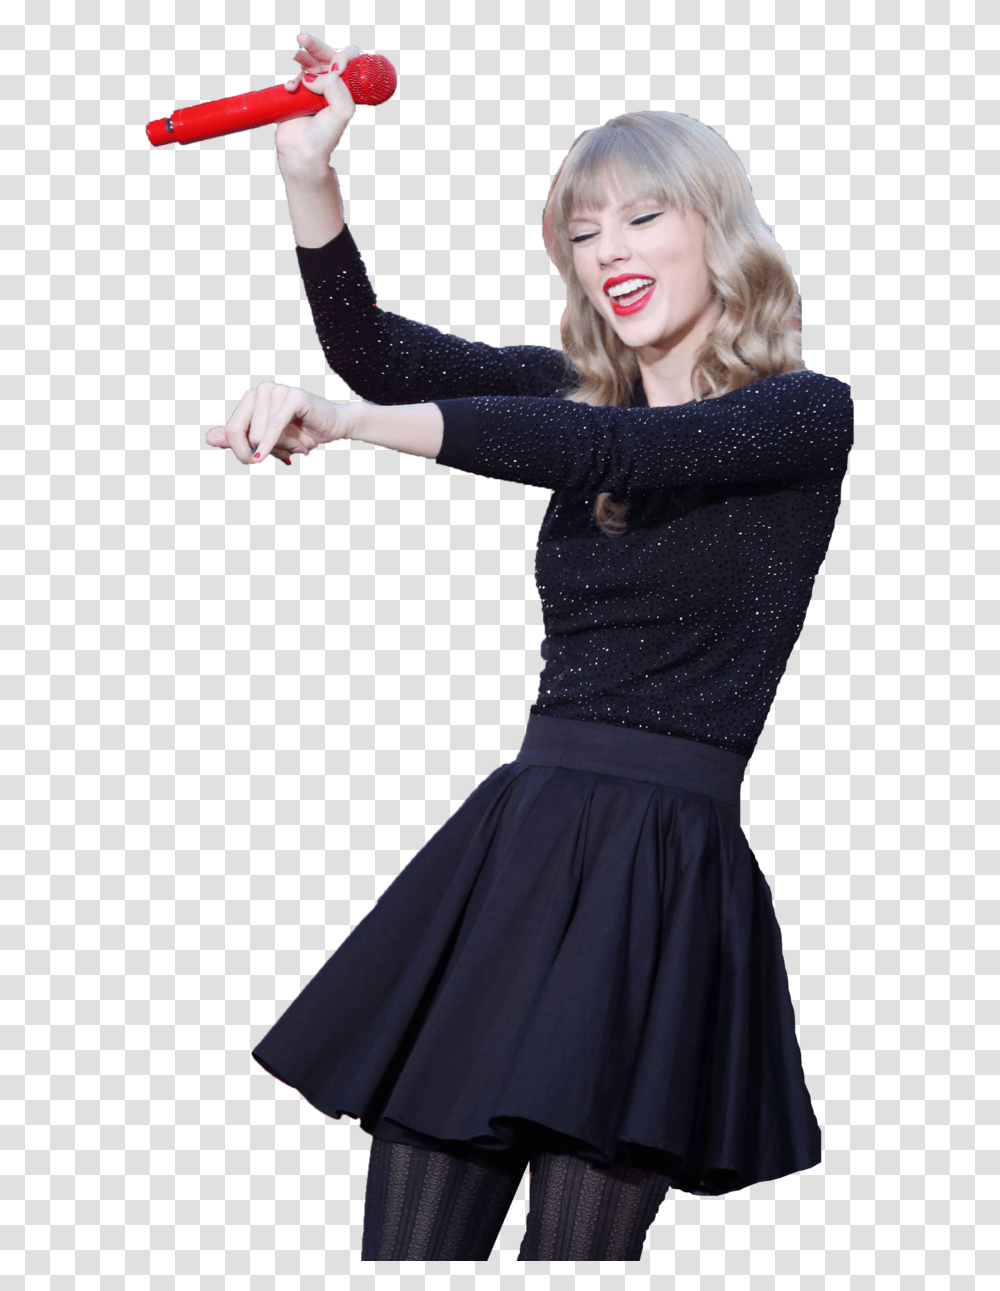 Taylor Swift And Transparan Image, Dance Pose, Leisure Activities, Skirt Transparent Png